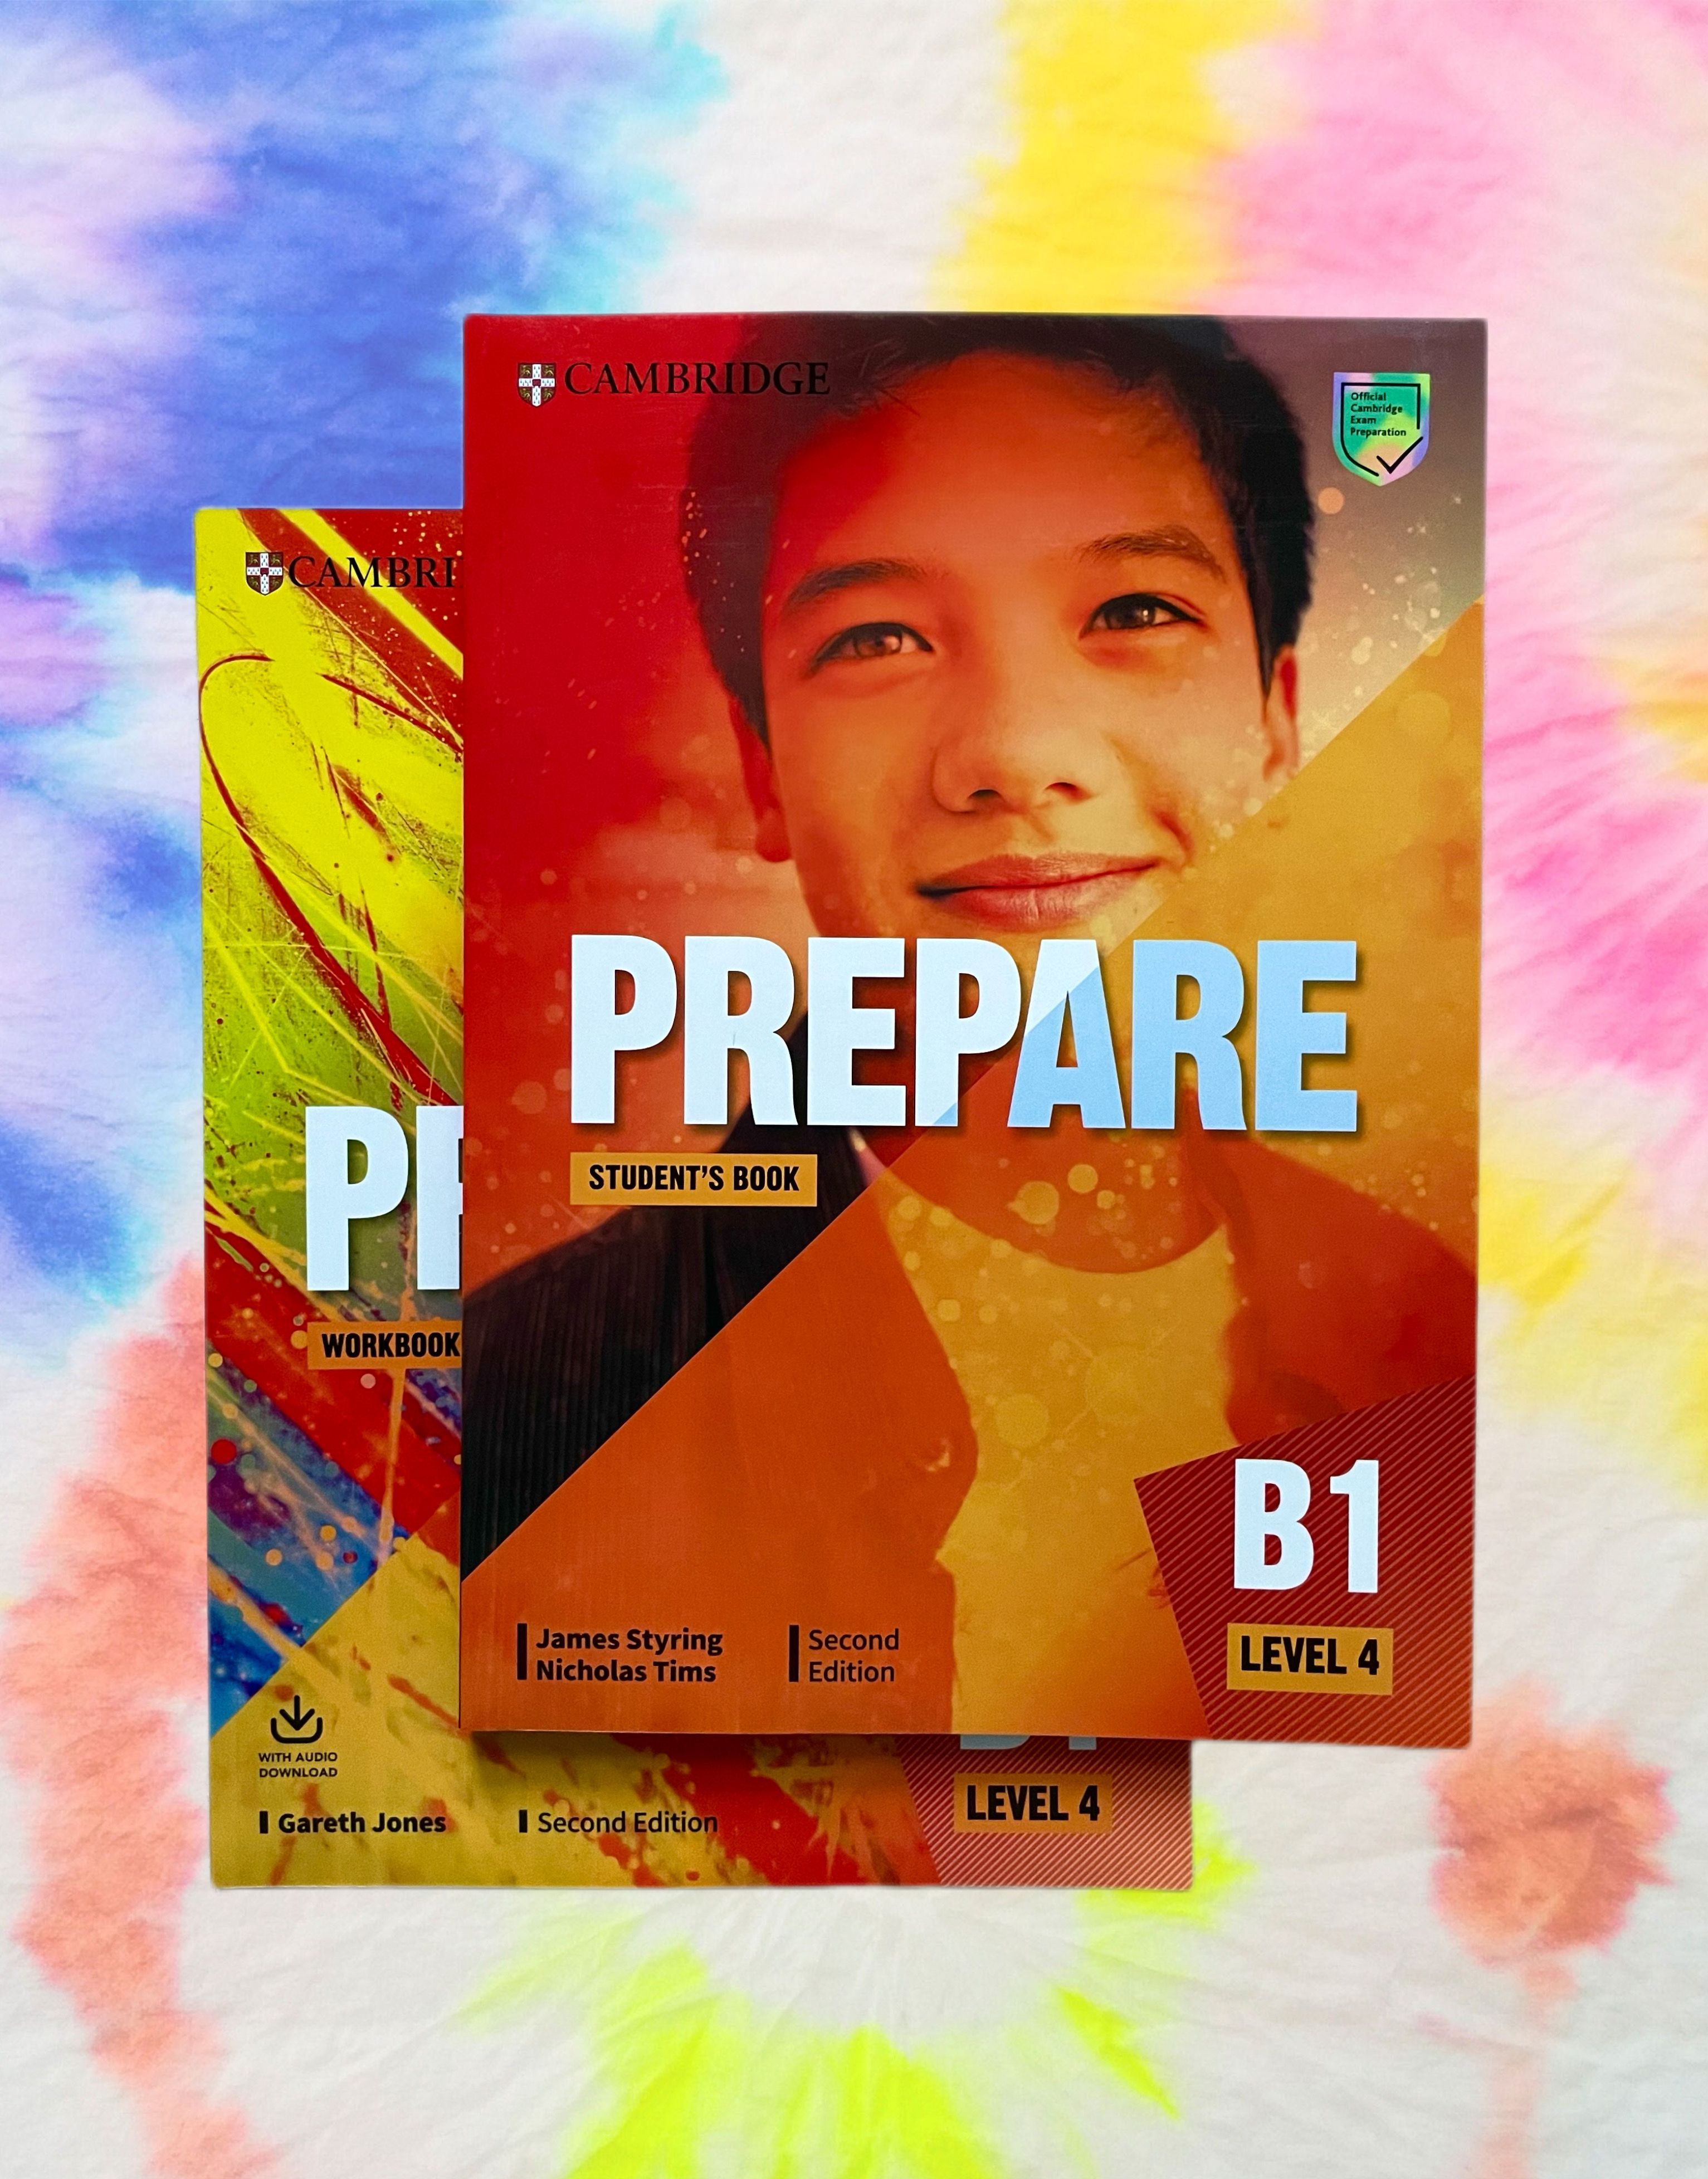 Prepare учебник. Prepare учебник английского. Учебник prepare 4. Prepare Level 4 student's book. Английский язык prepare